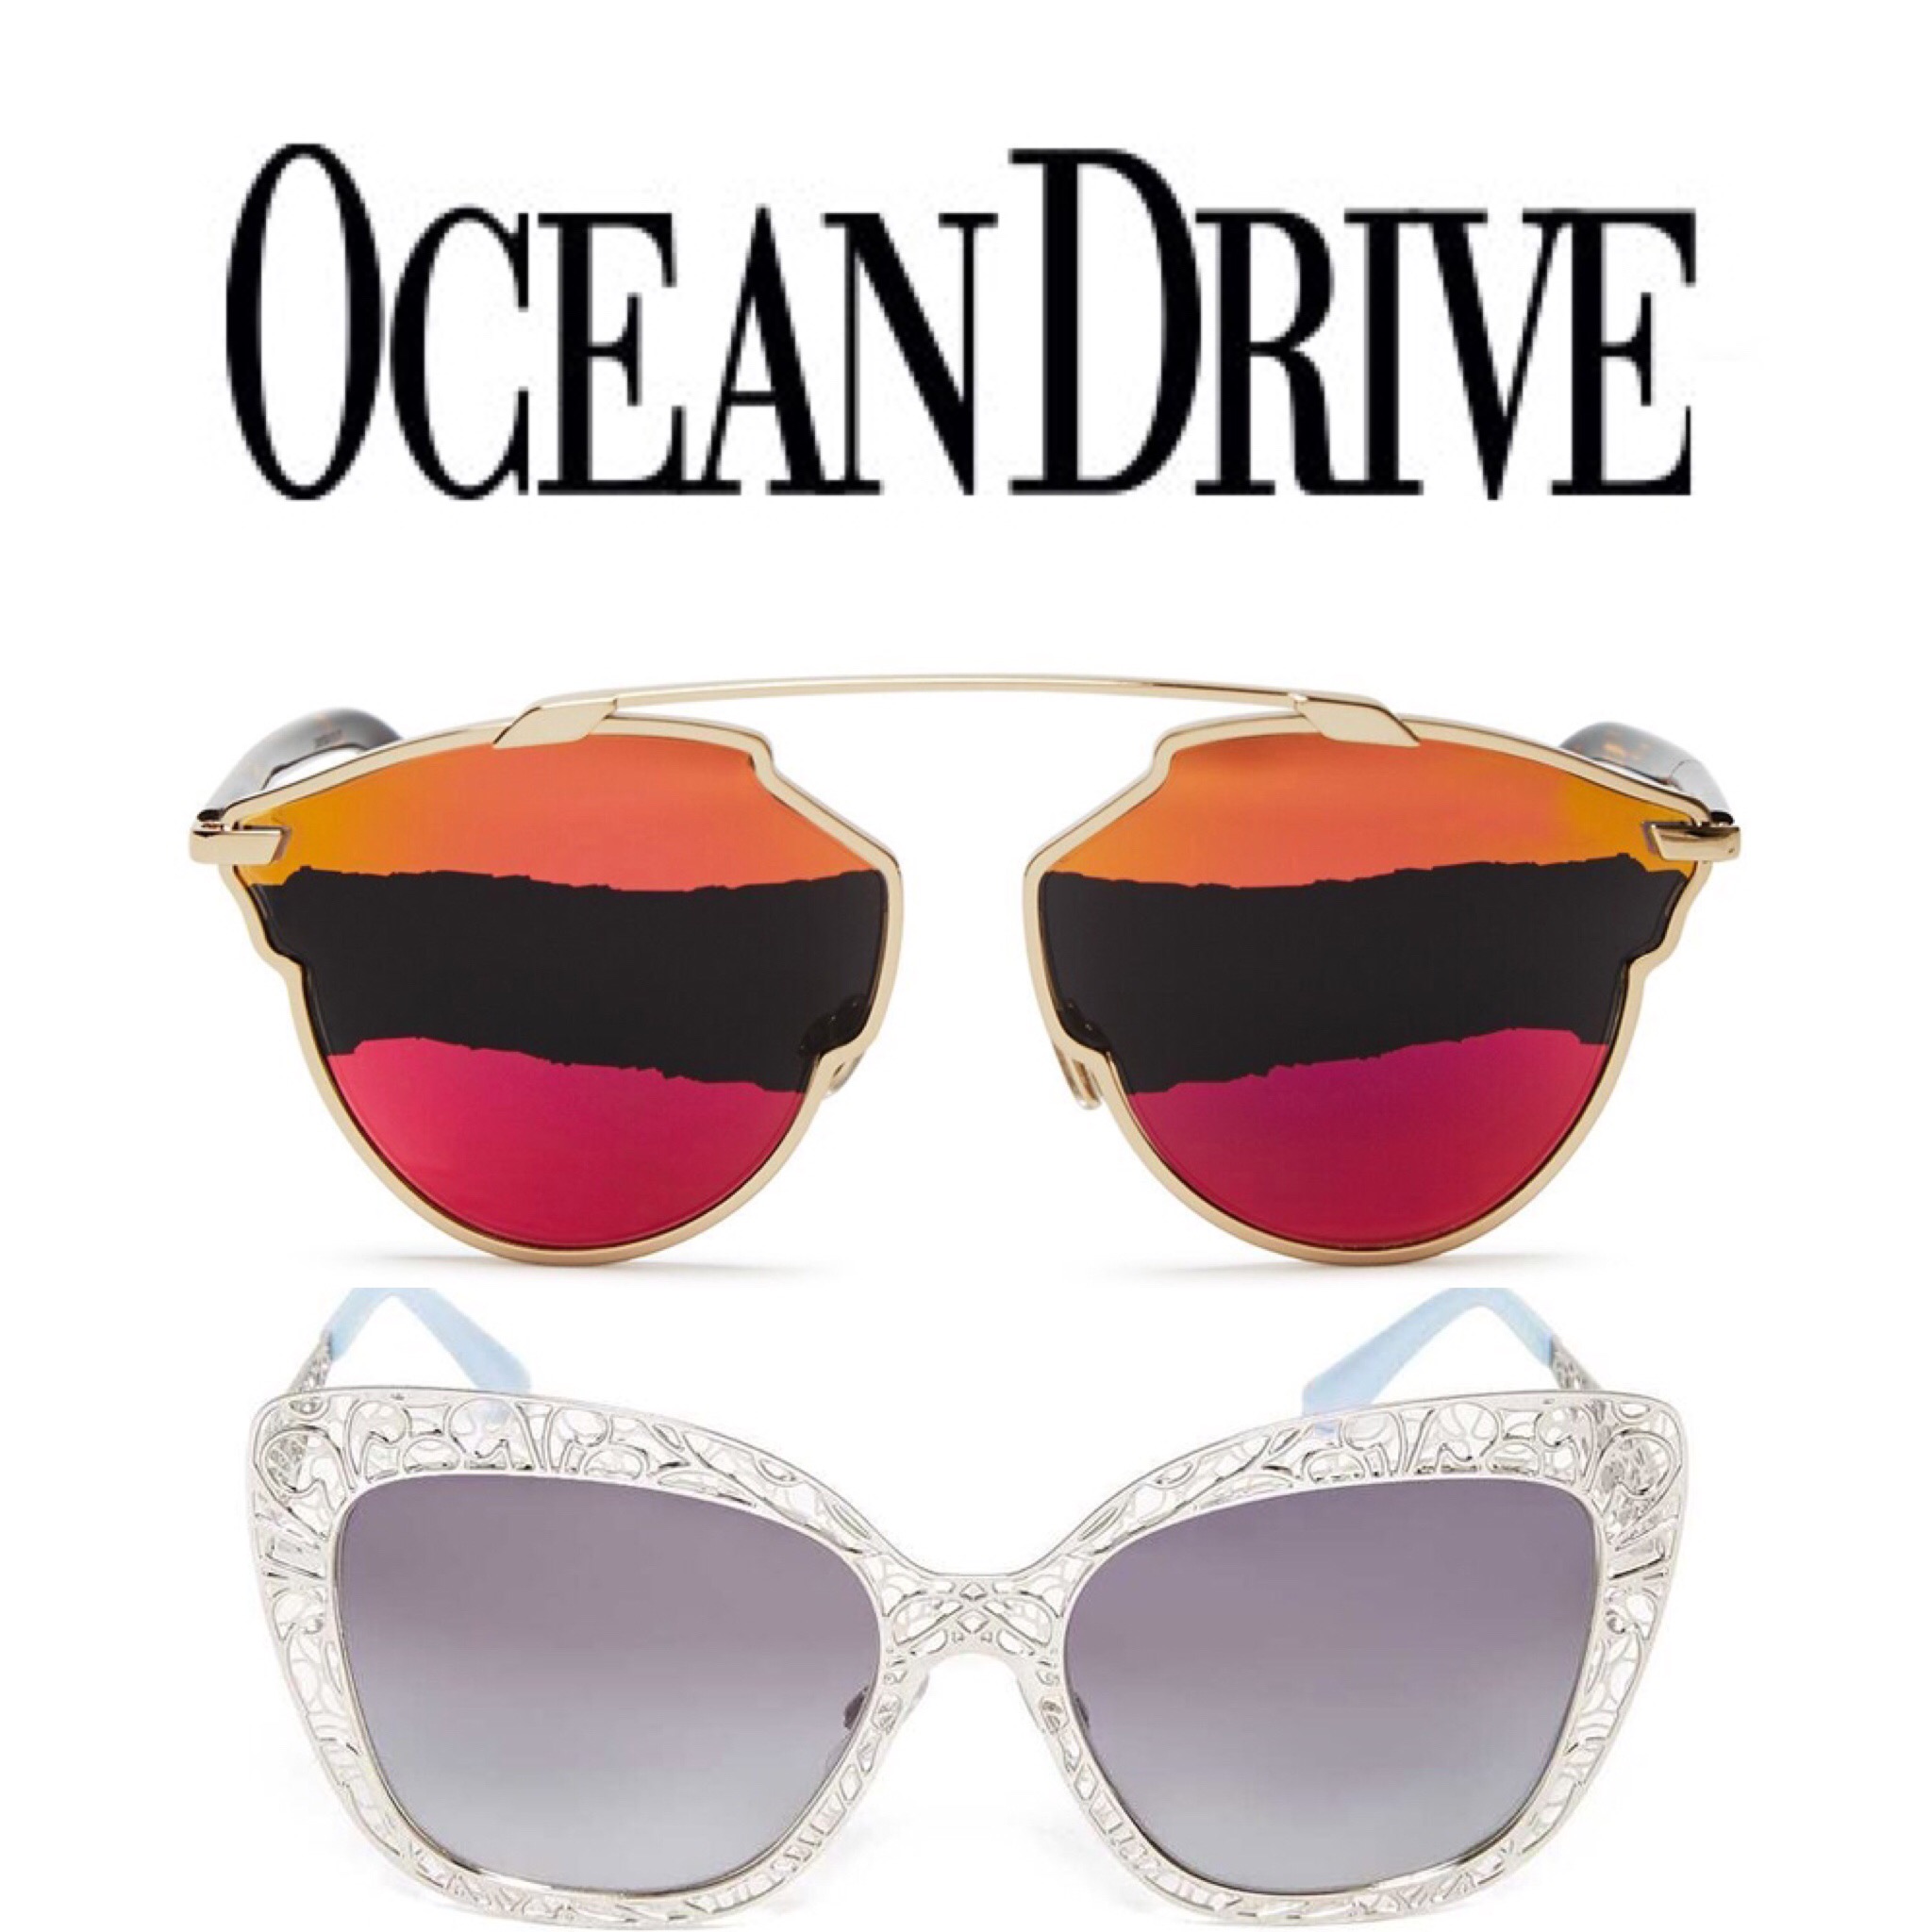  https://oceandrive.com/stunning-sunglasses-for-every-social-event 